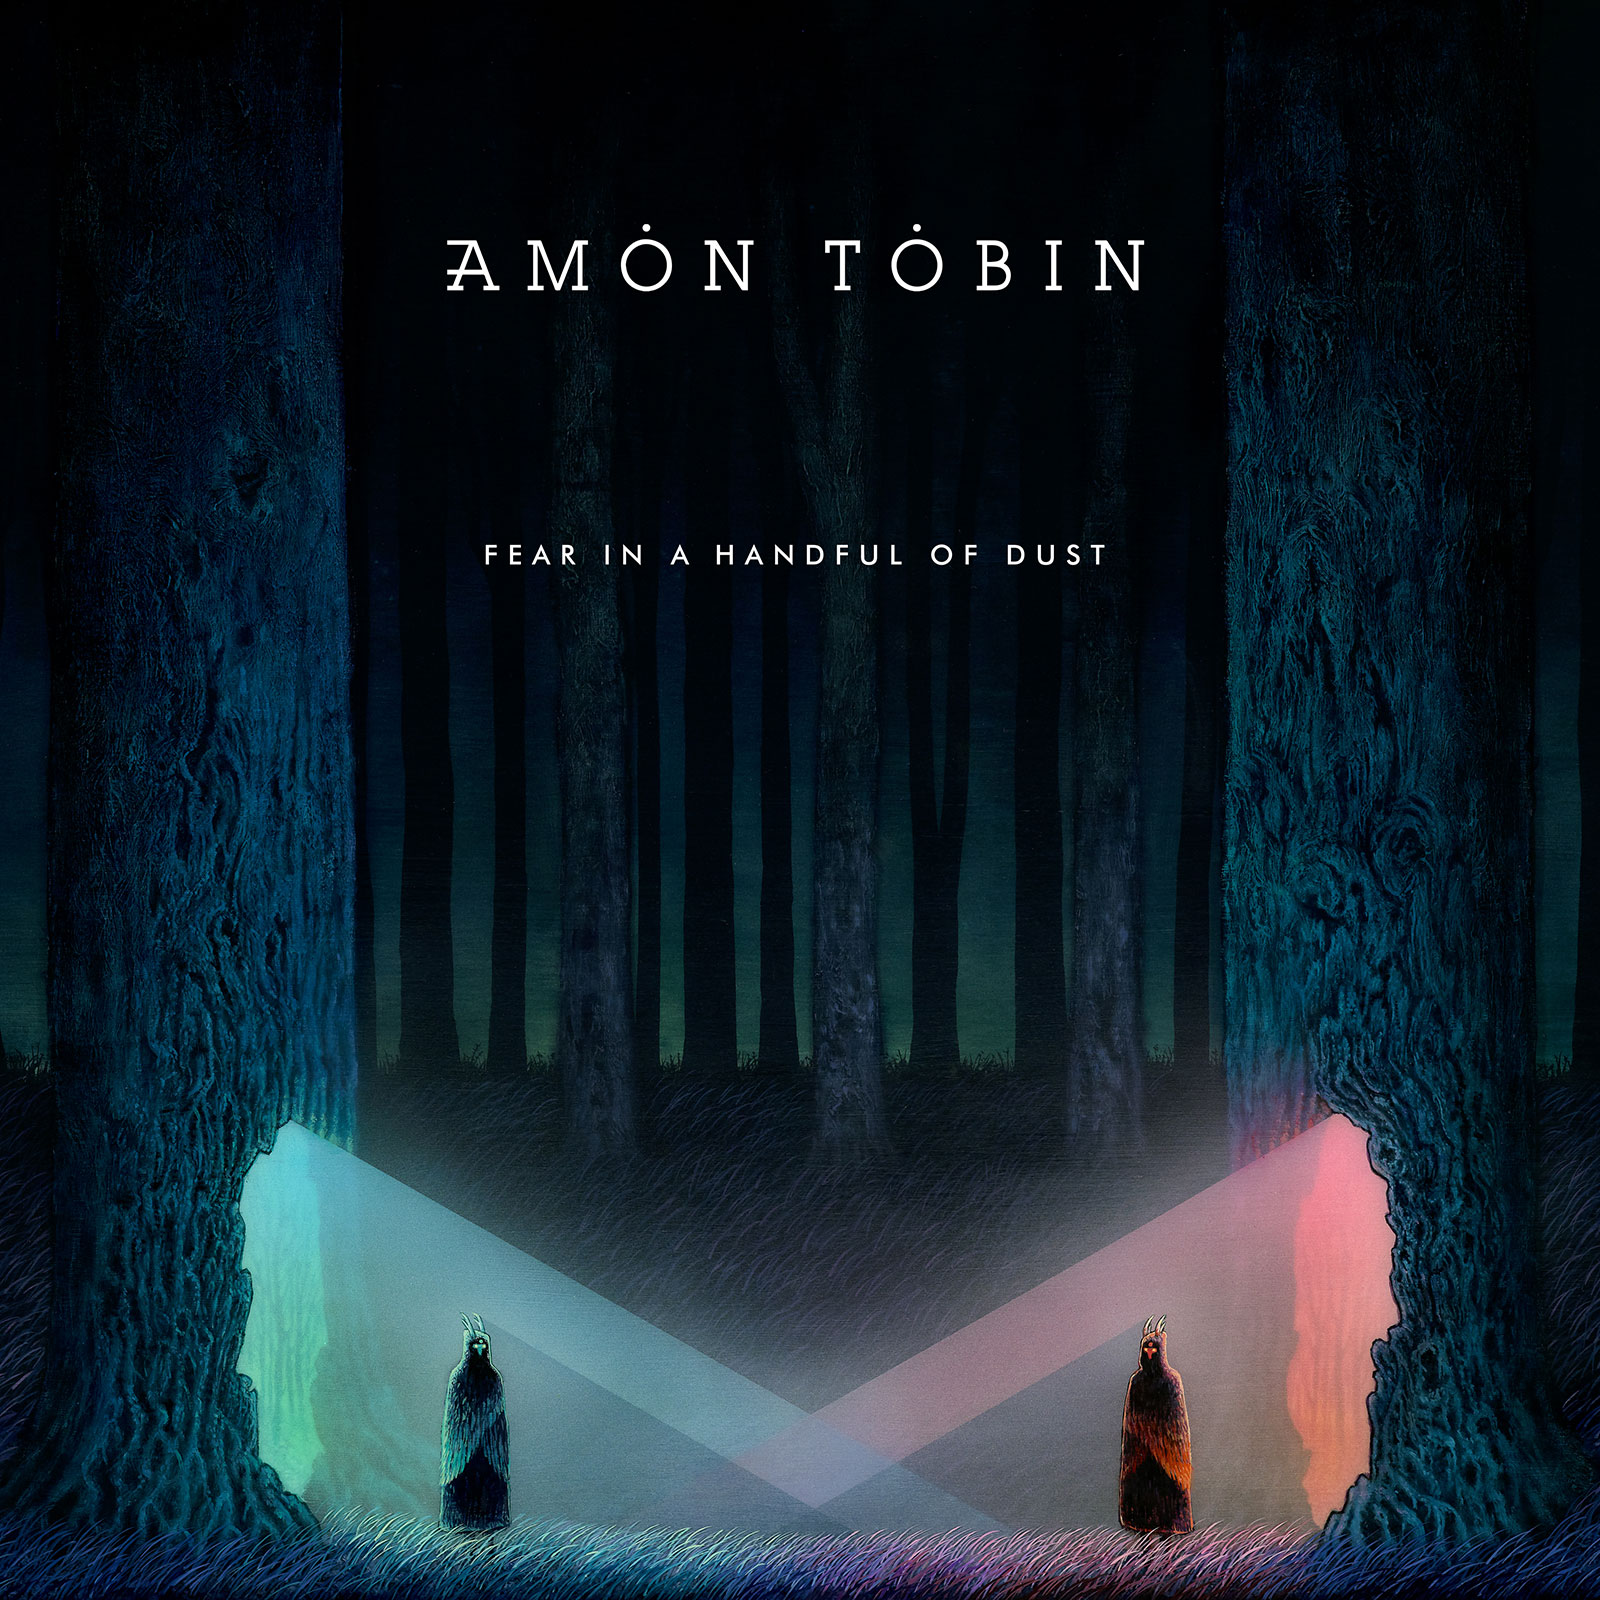 amon-tobin-fear-in-a-handful-of-dust-album-cover-oz-edm